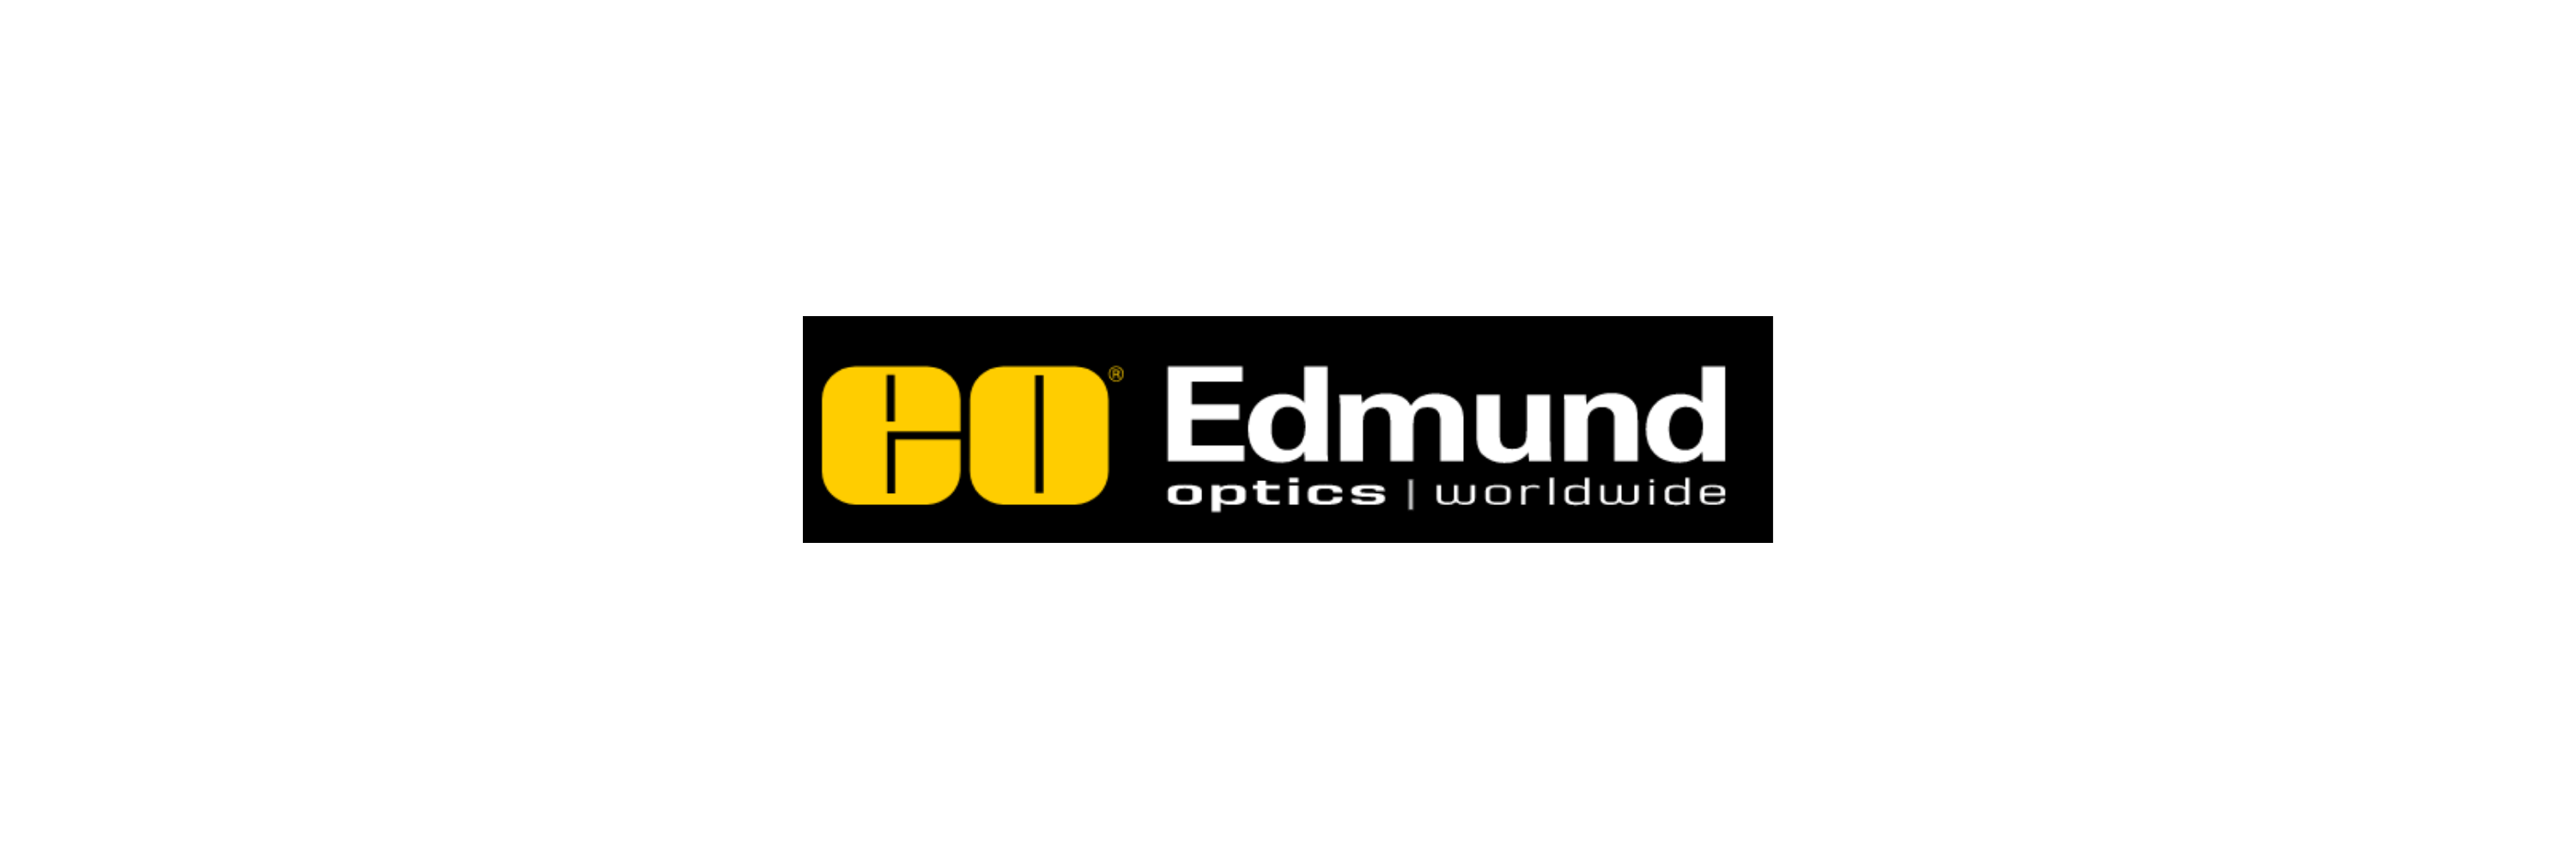 Edmund Optics - Klenk Maschinenhandel